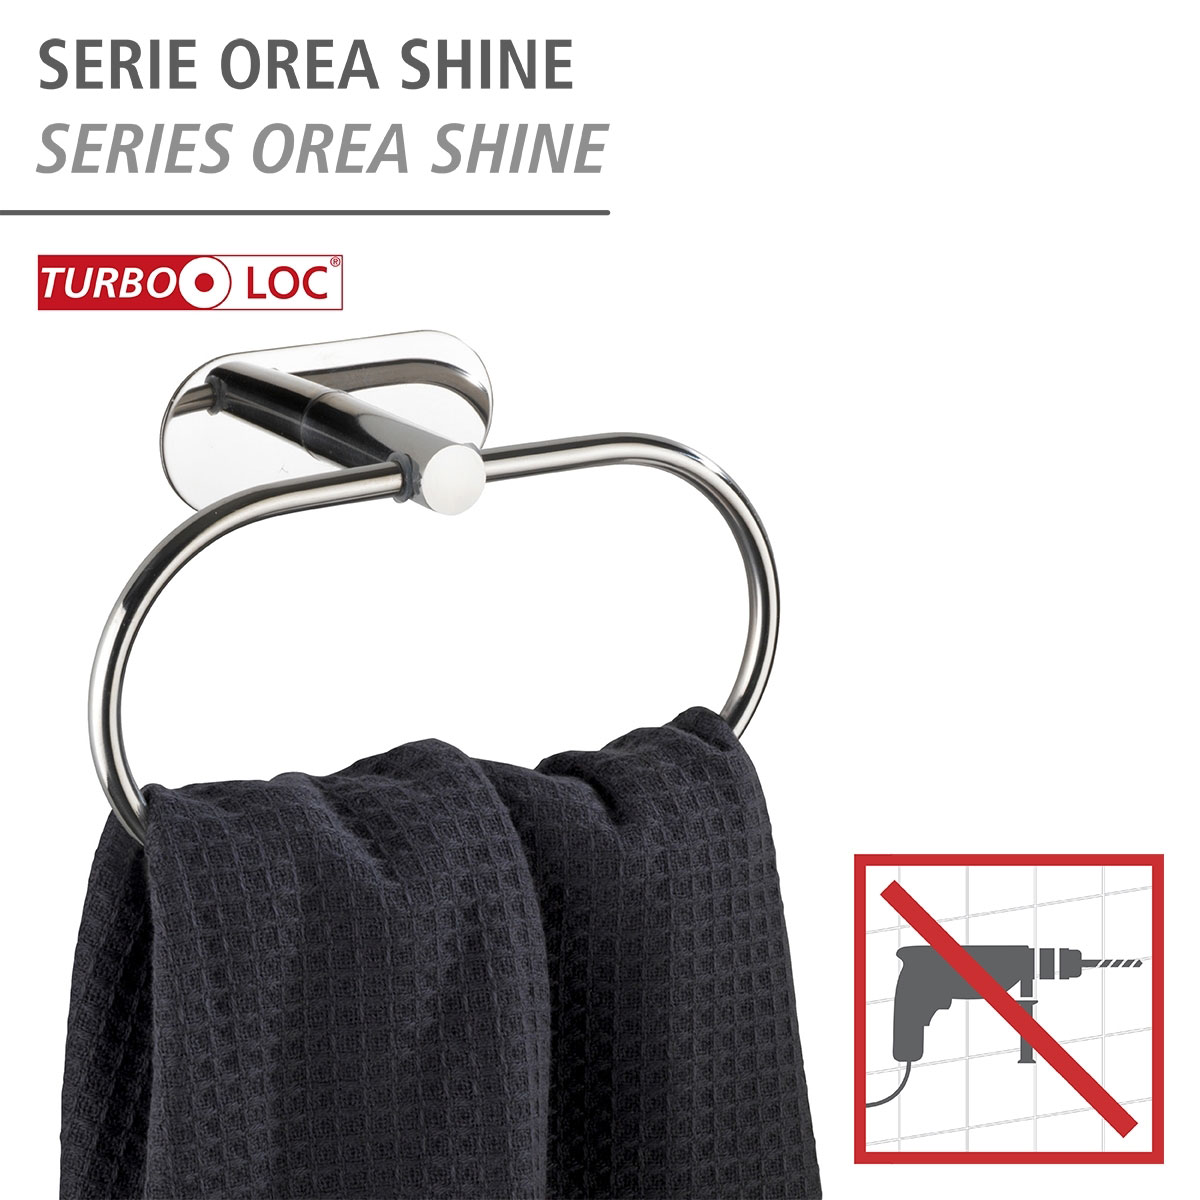 Wenko Turbo-Loc Handtuchring 503695 | Shine Orea